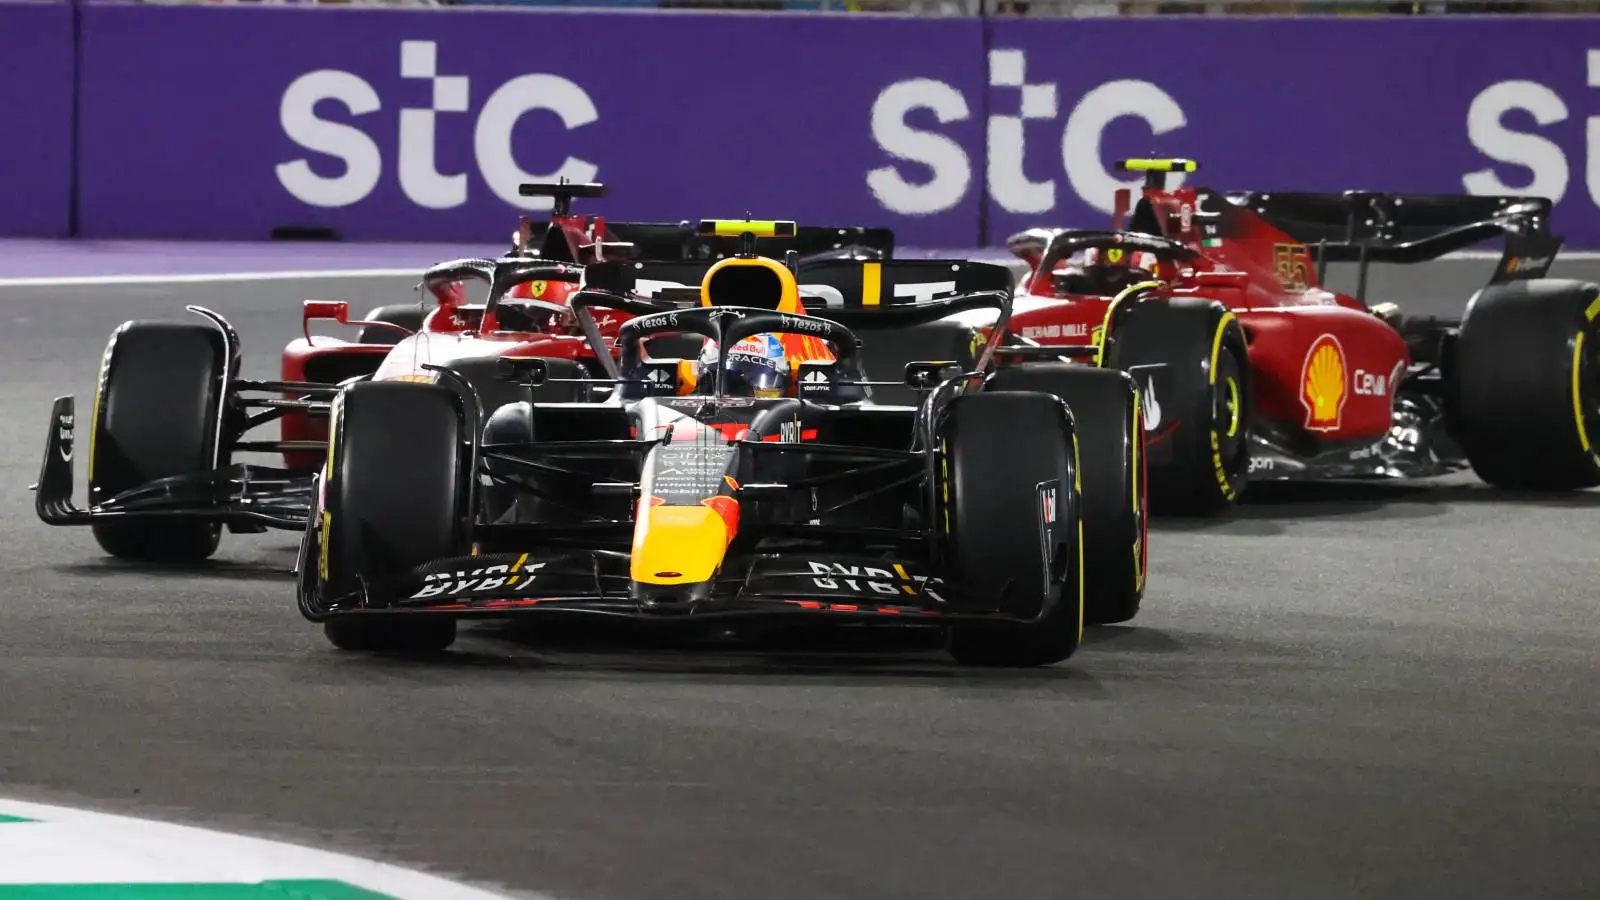 Charles Leclerc and Carlos Sainz, Ferrari, chase Sergio Perez, Red Bull. Saudi Arabia, March 2022.